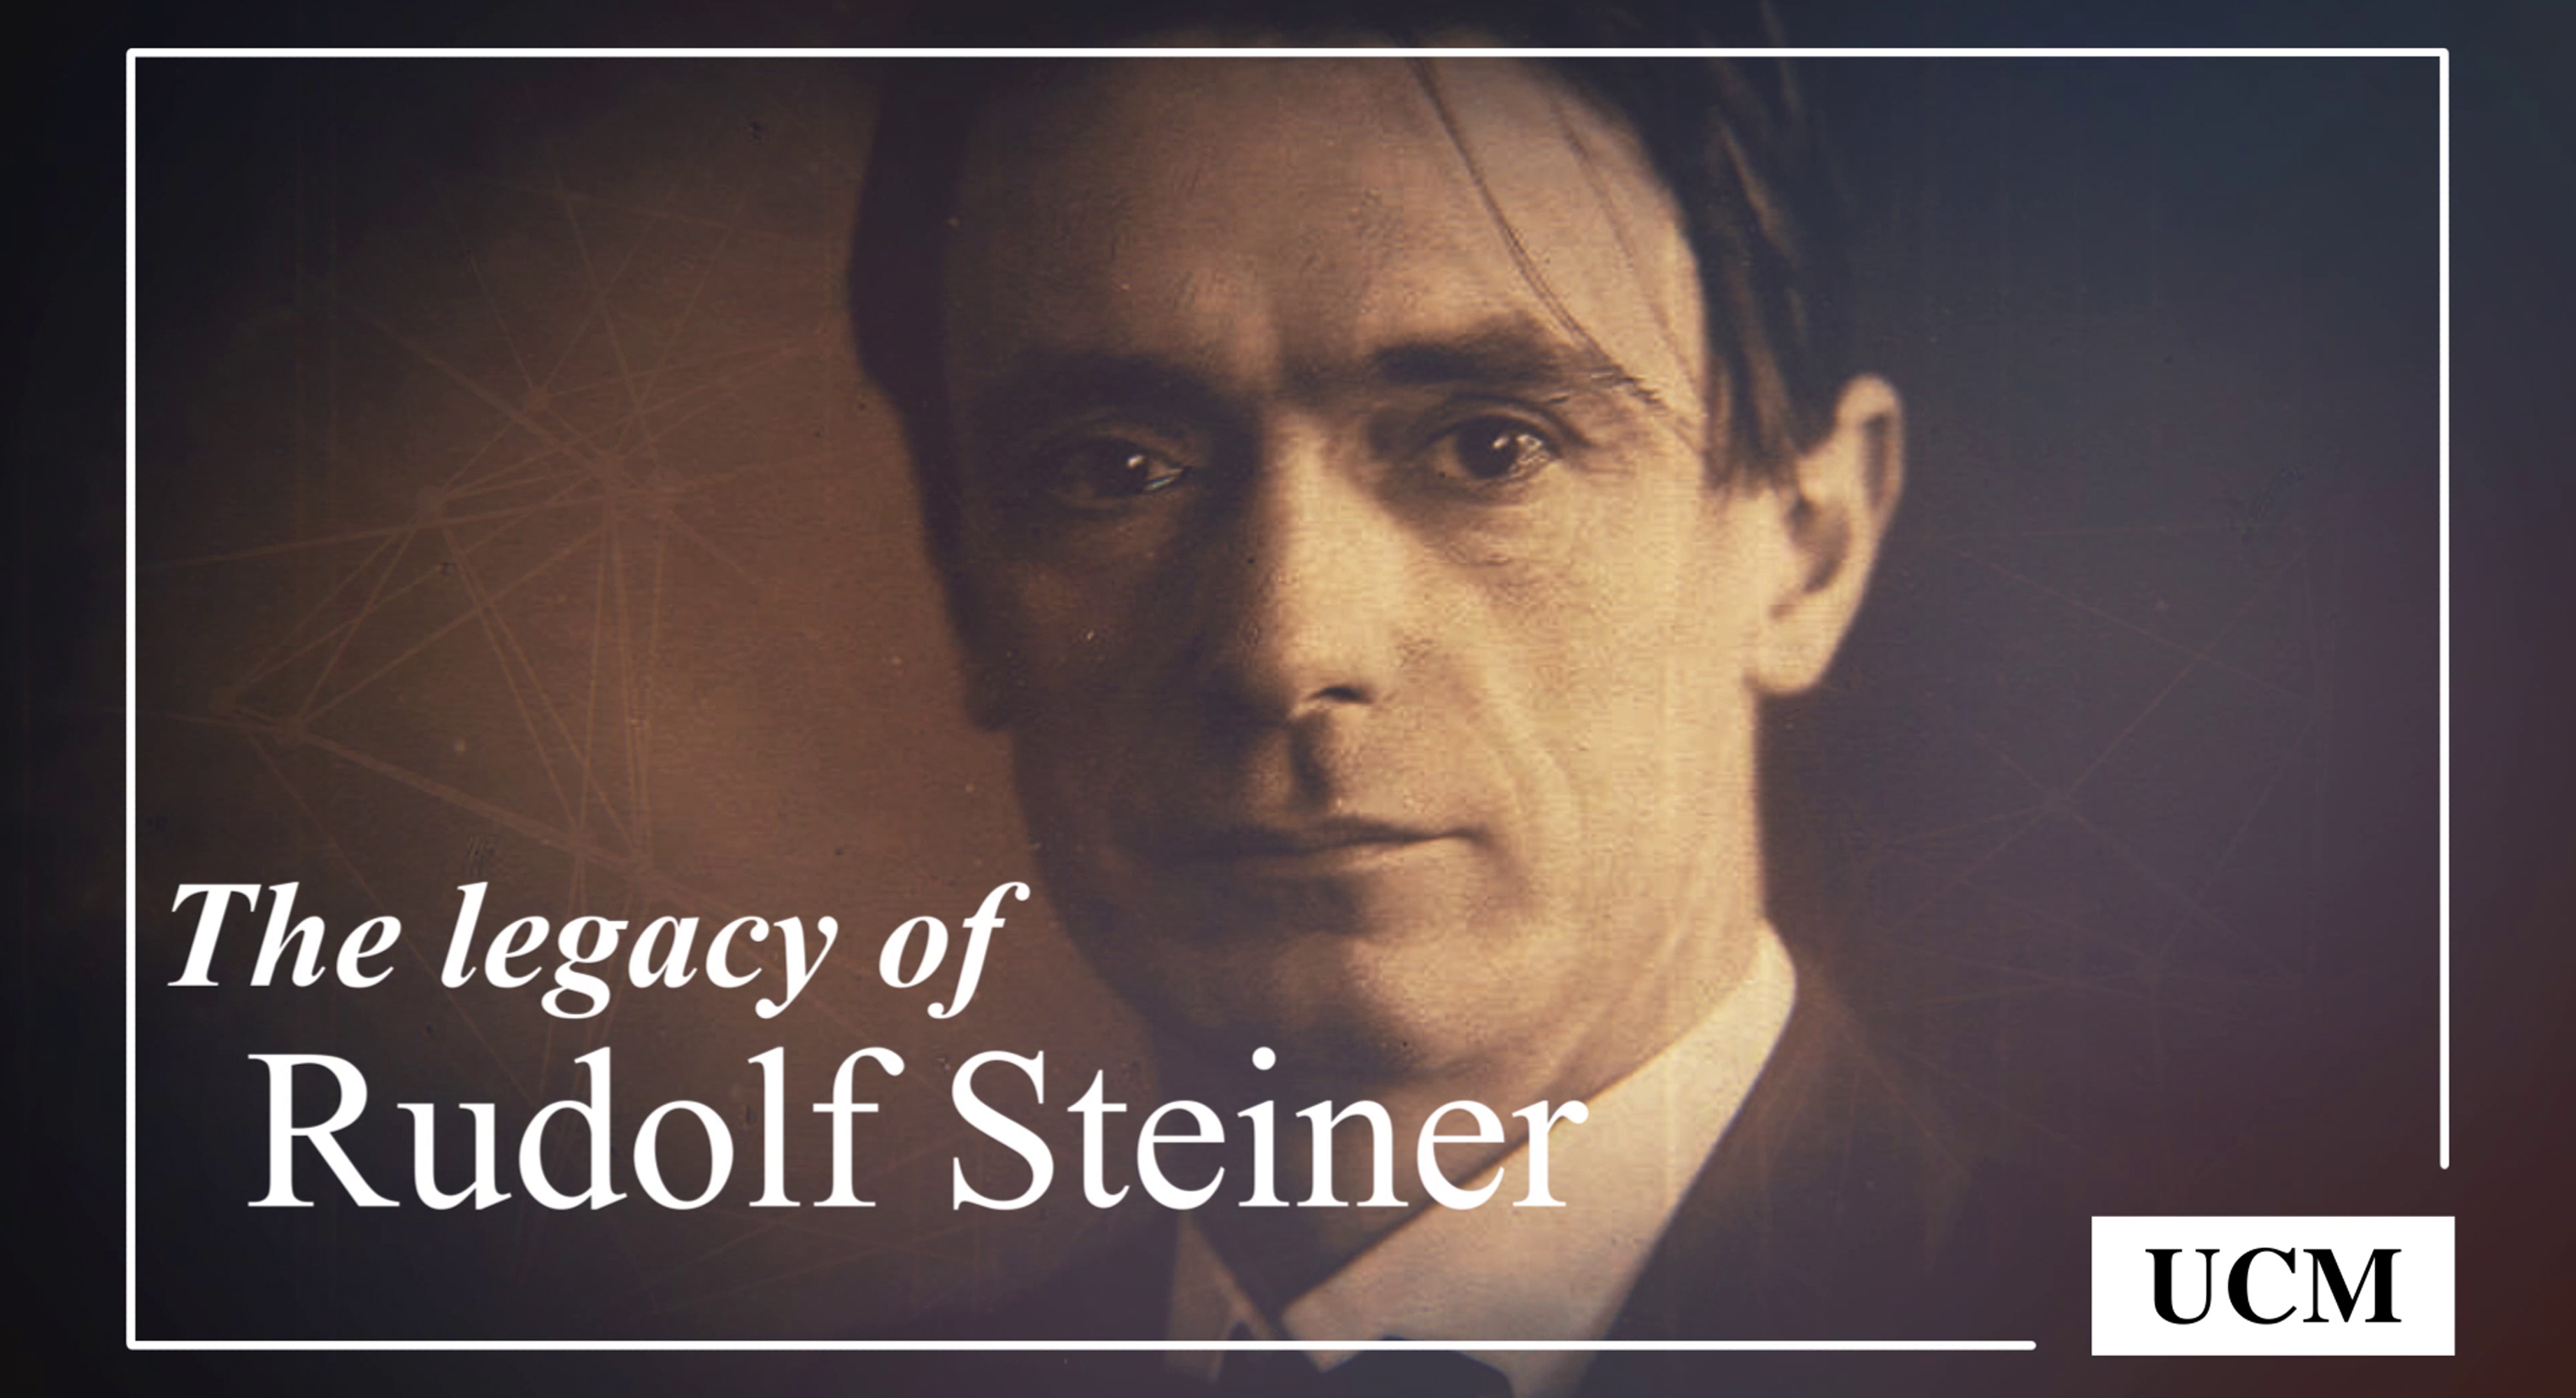 The Legacy of Rudolf Steiner